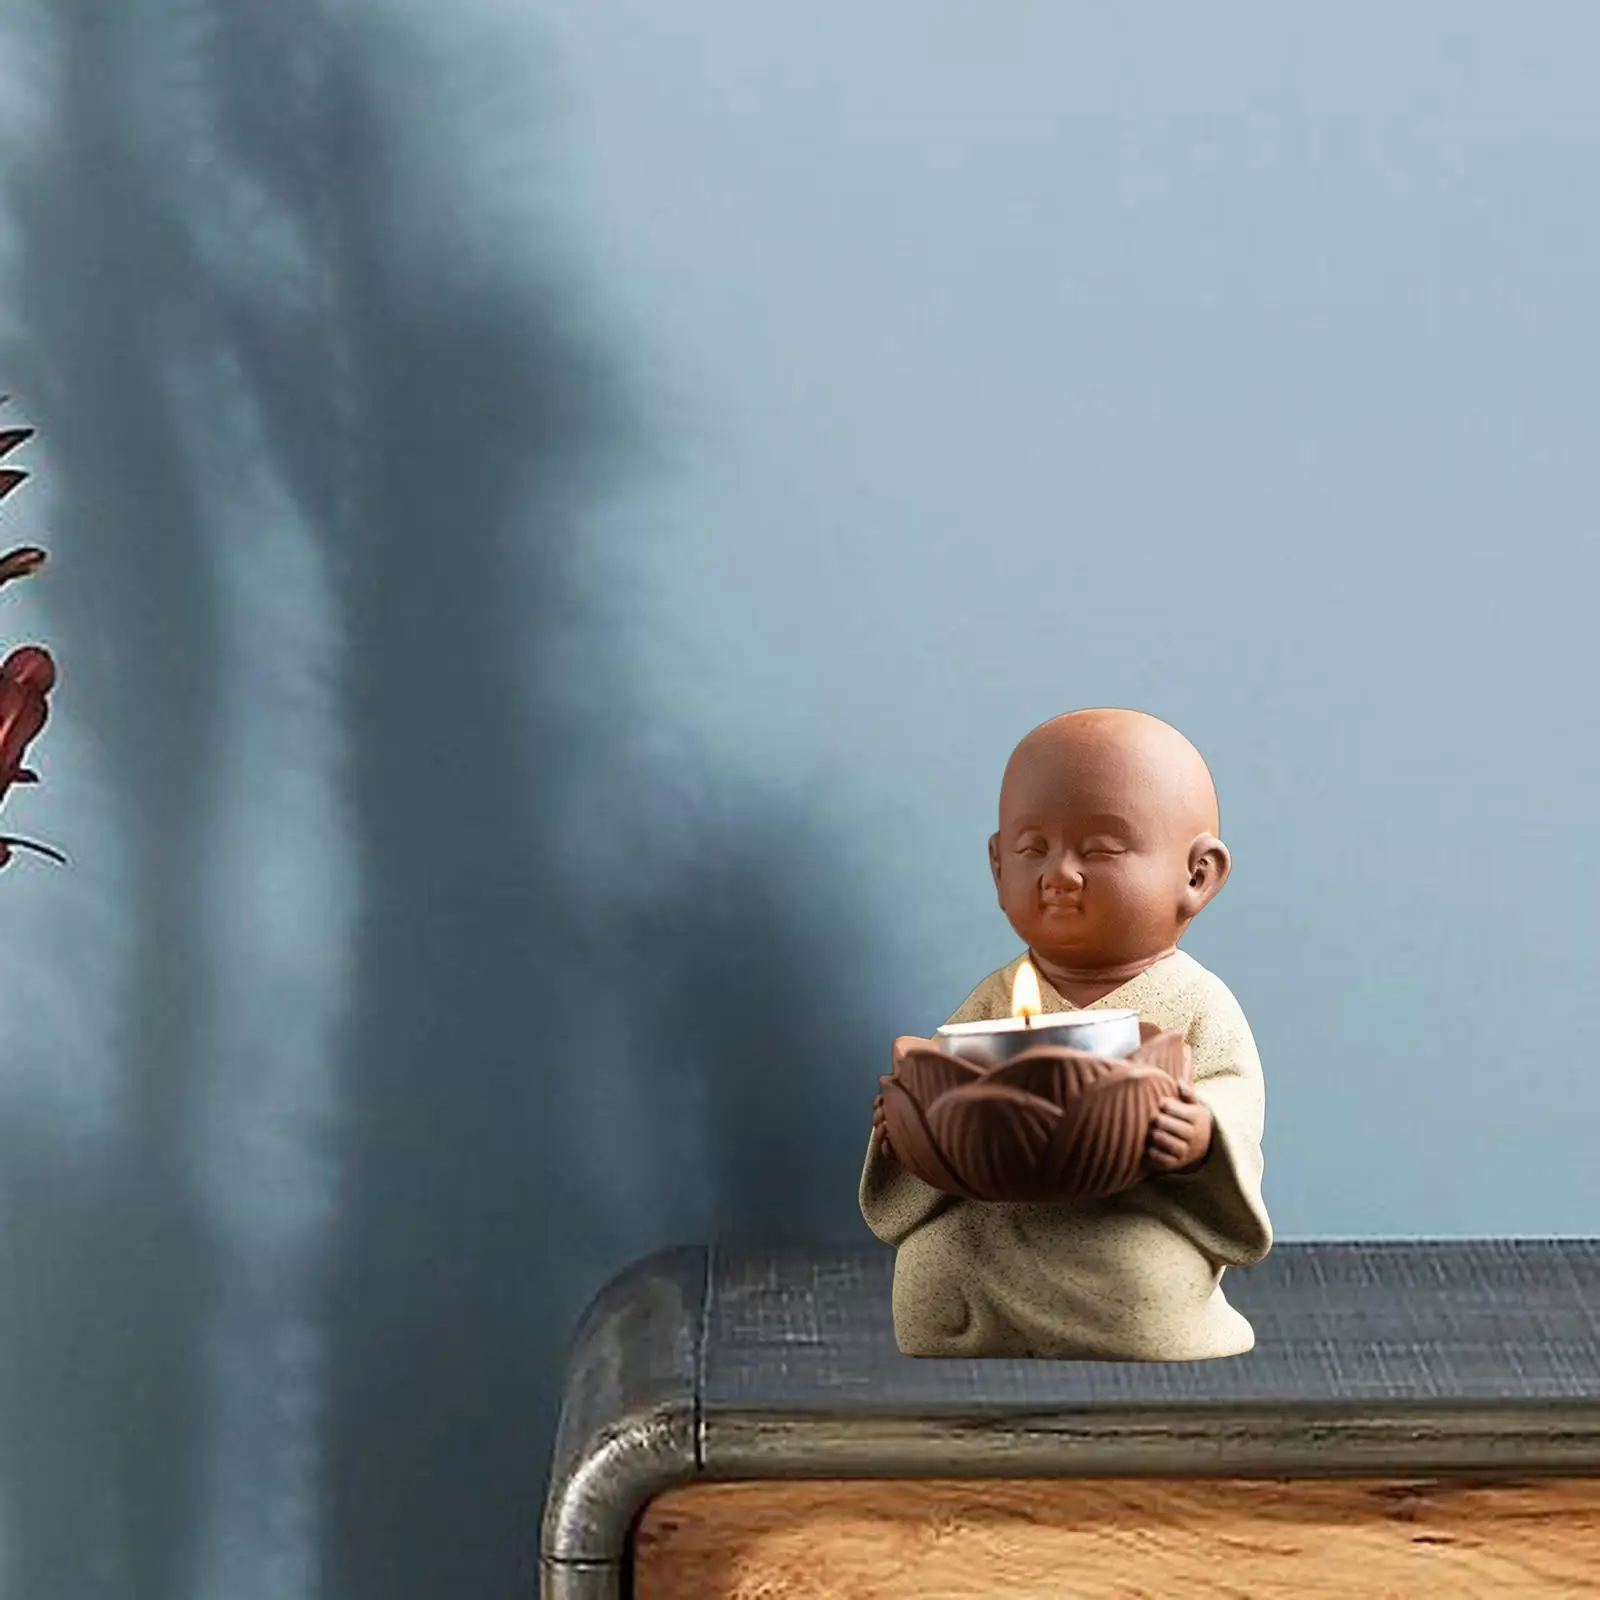 Ceramic Little Monk Statue Tealight Candle Holder Votive Candle Holder Zen Yoga Decoration for Home Office Decor Lightweight